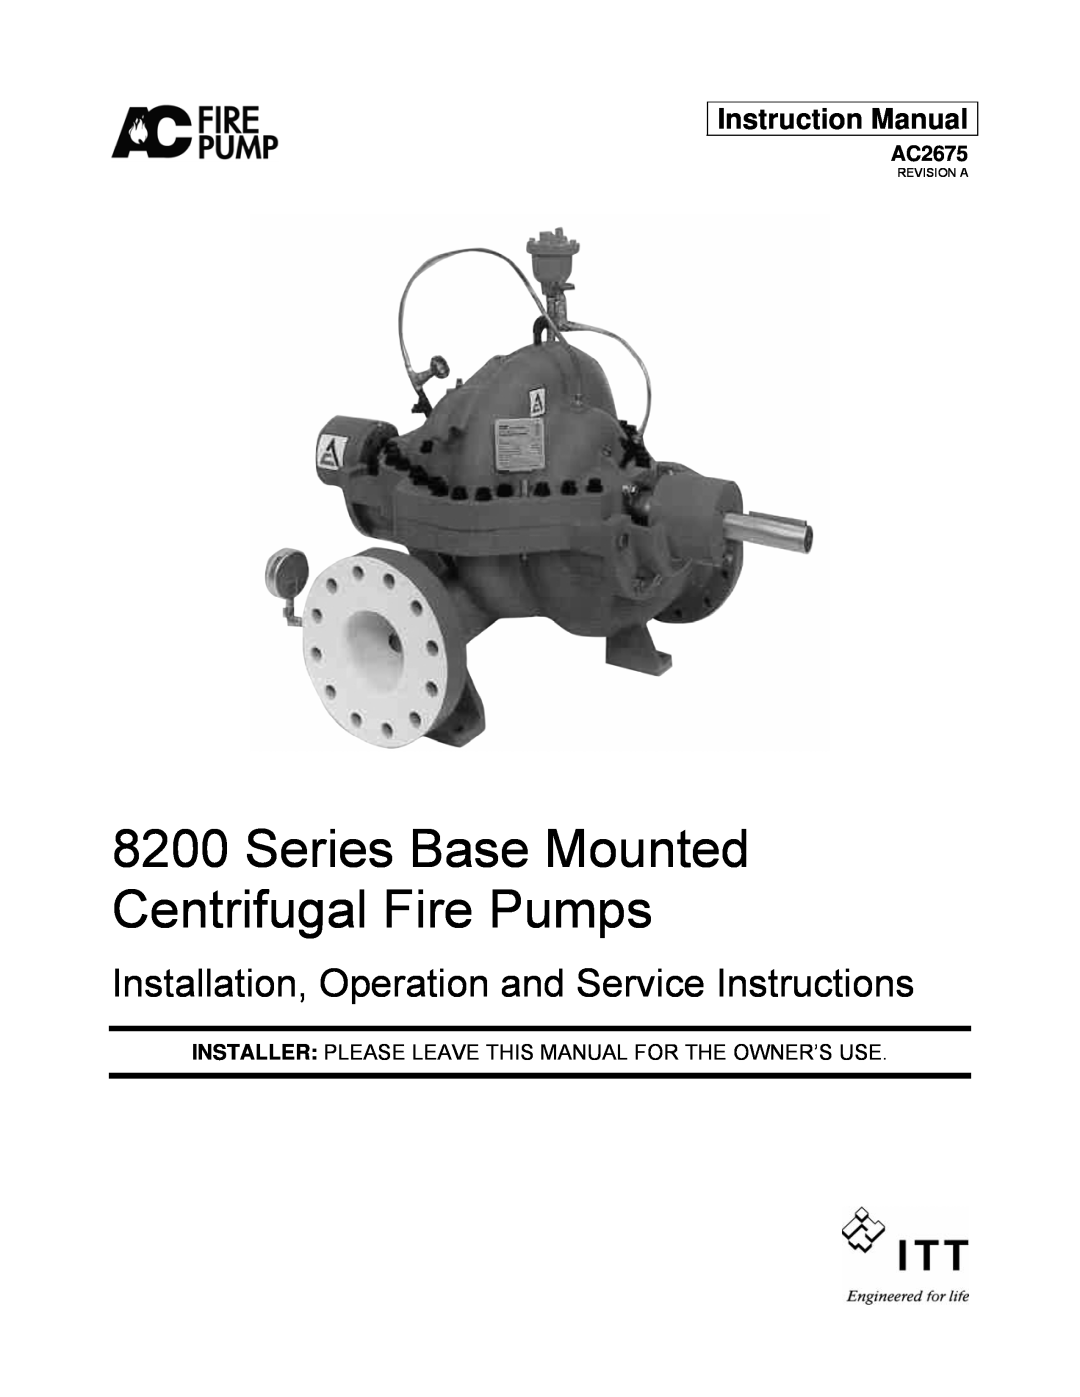 AC International 8200 Series instruction manual AC2675, Series Base Mounted Centrifugal Fire Pumps 